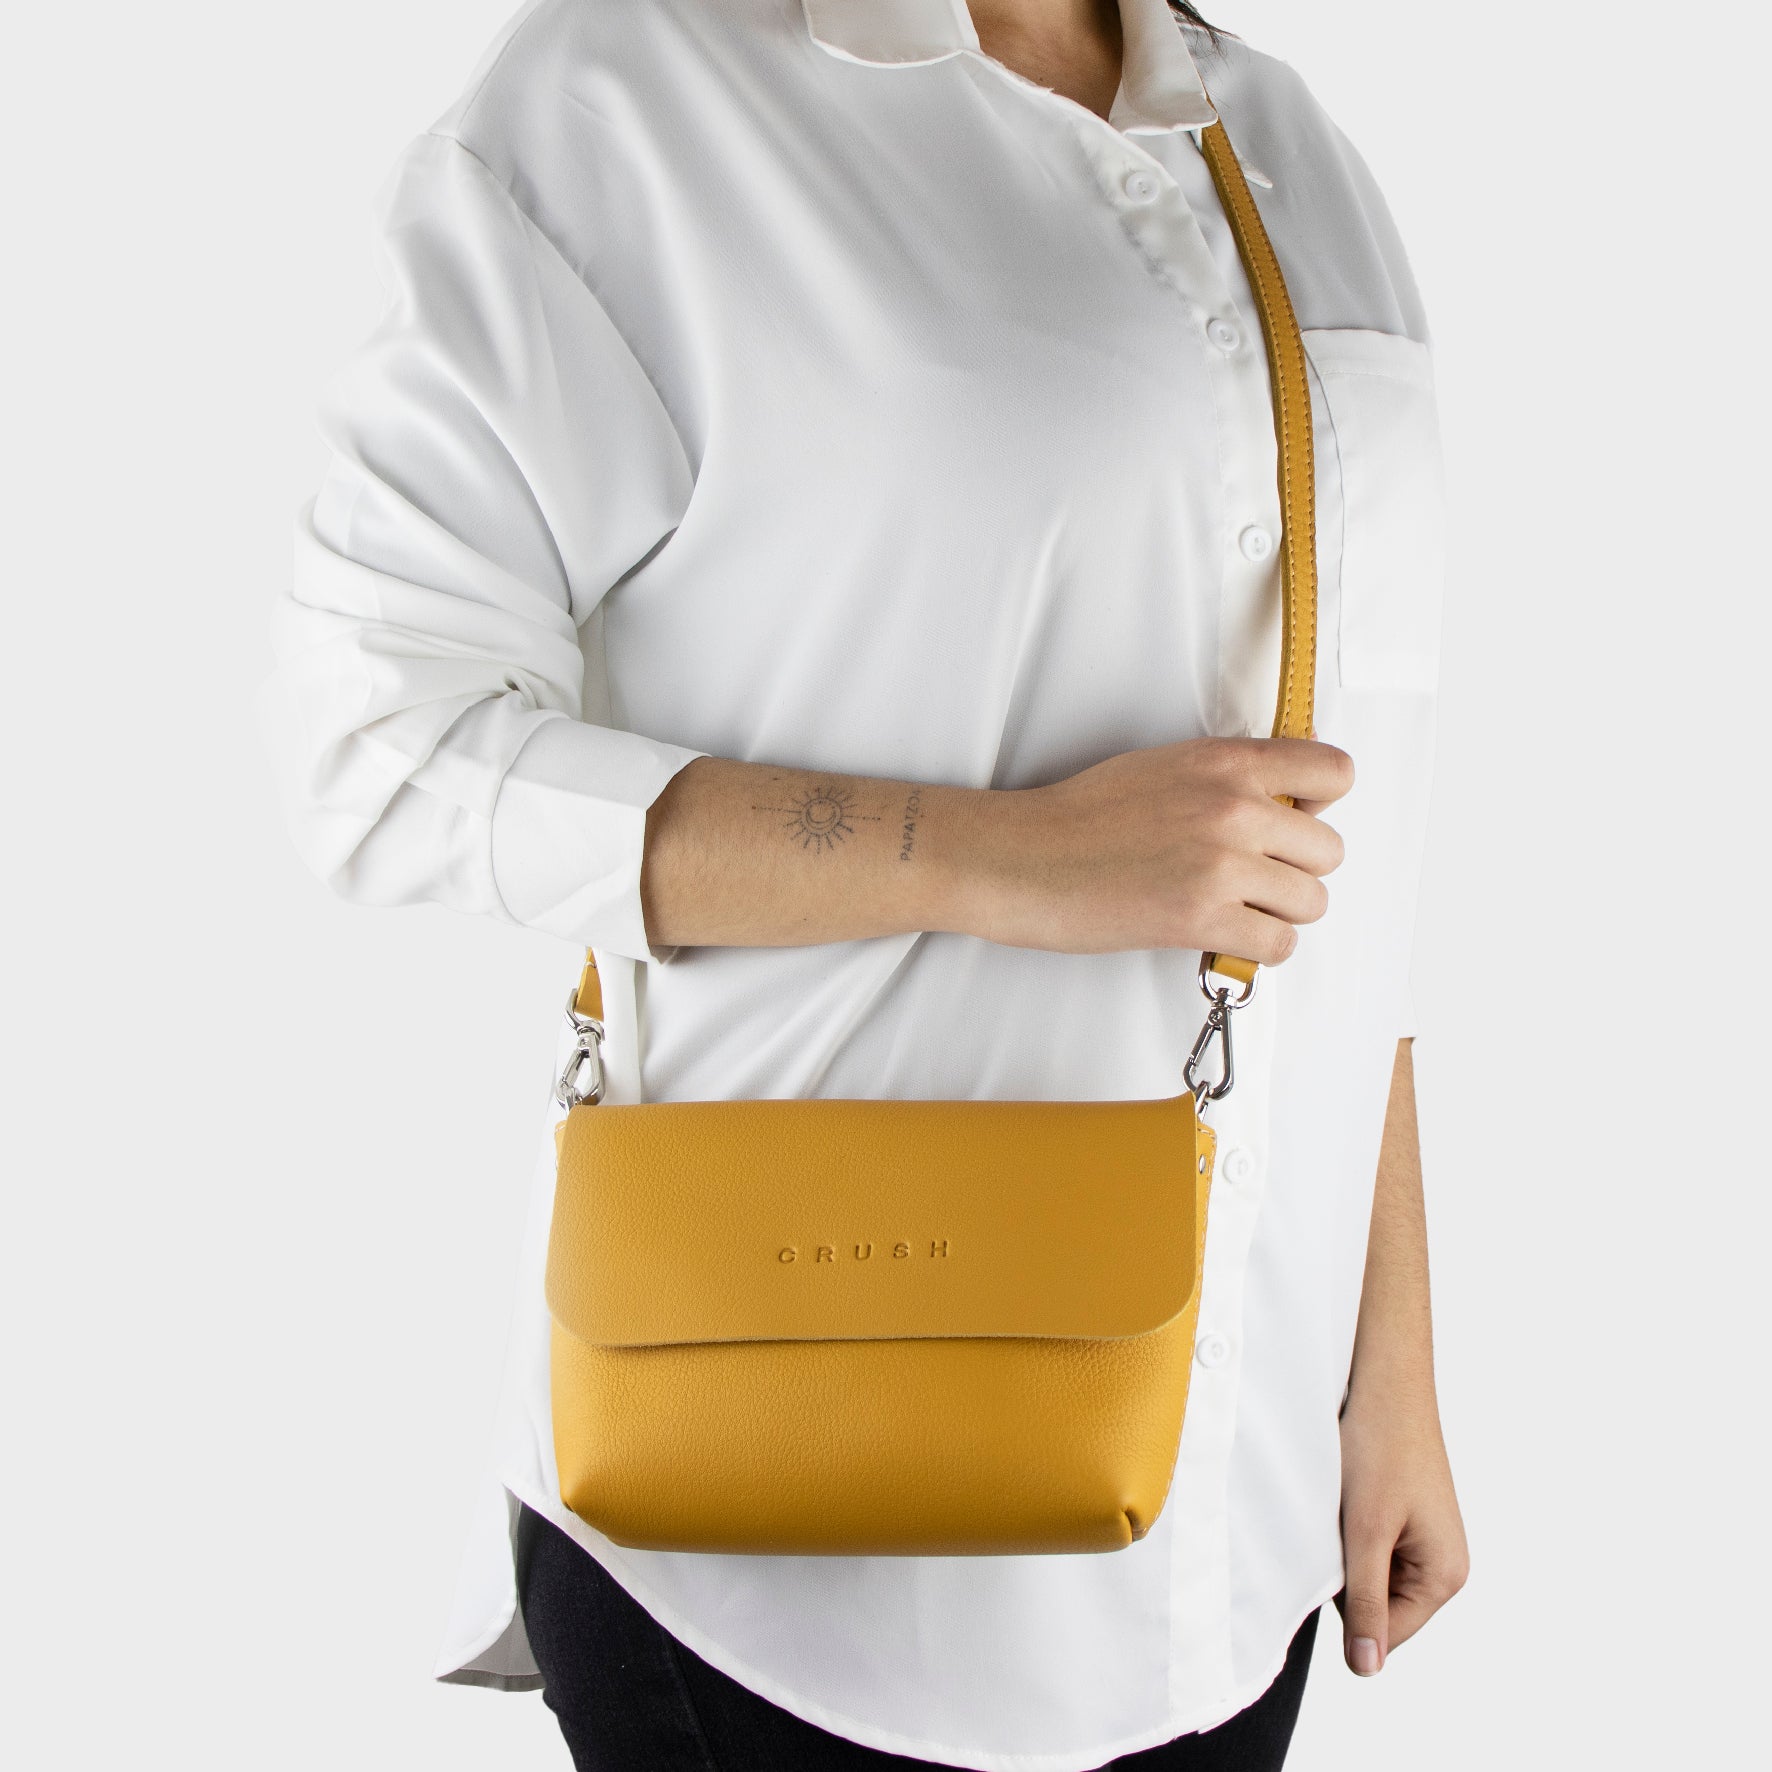 Joy Syna S - Leather Crossbody Bag Women - Golden